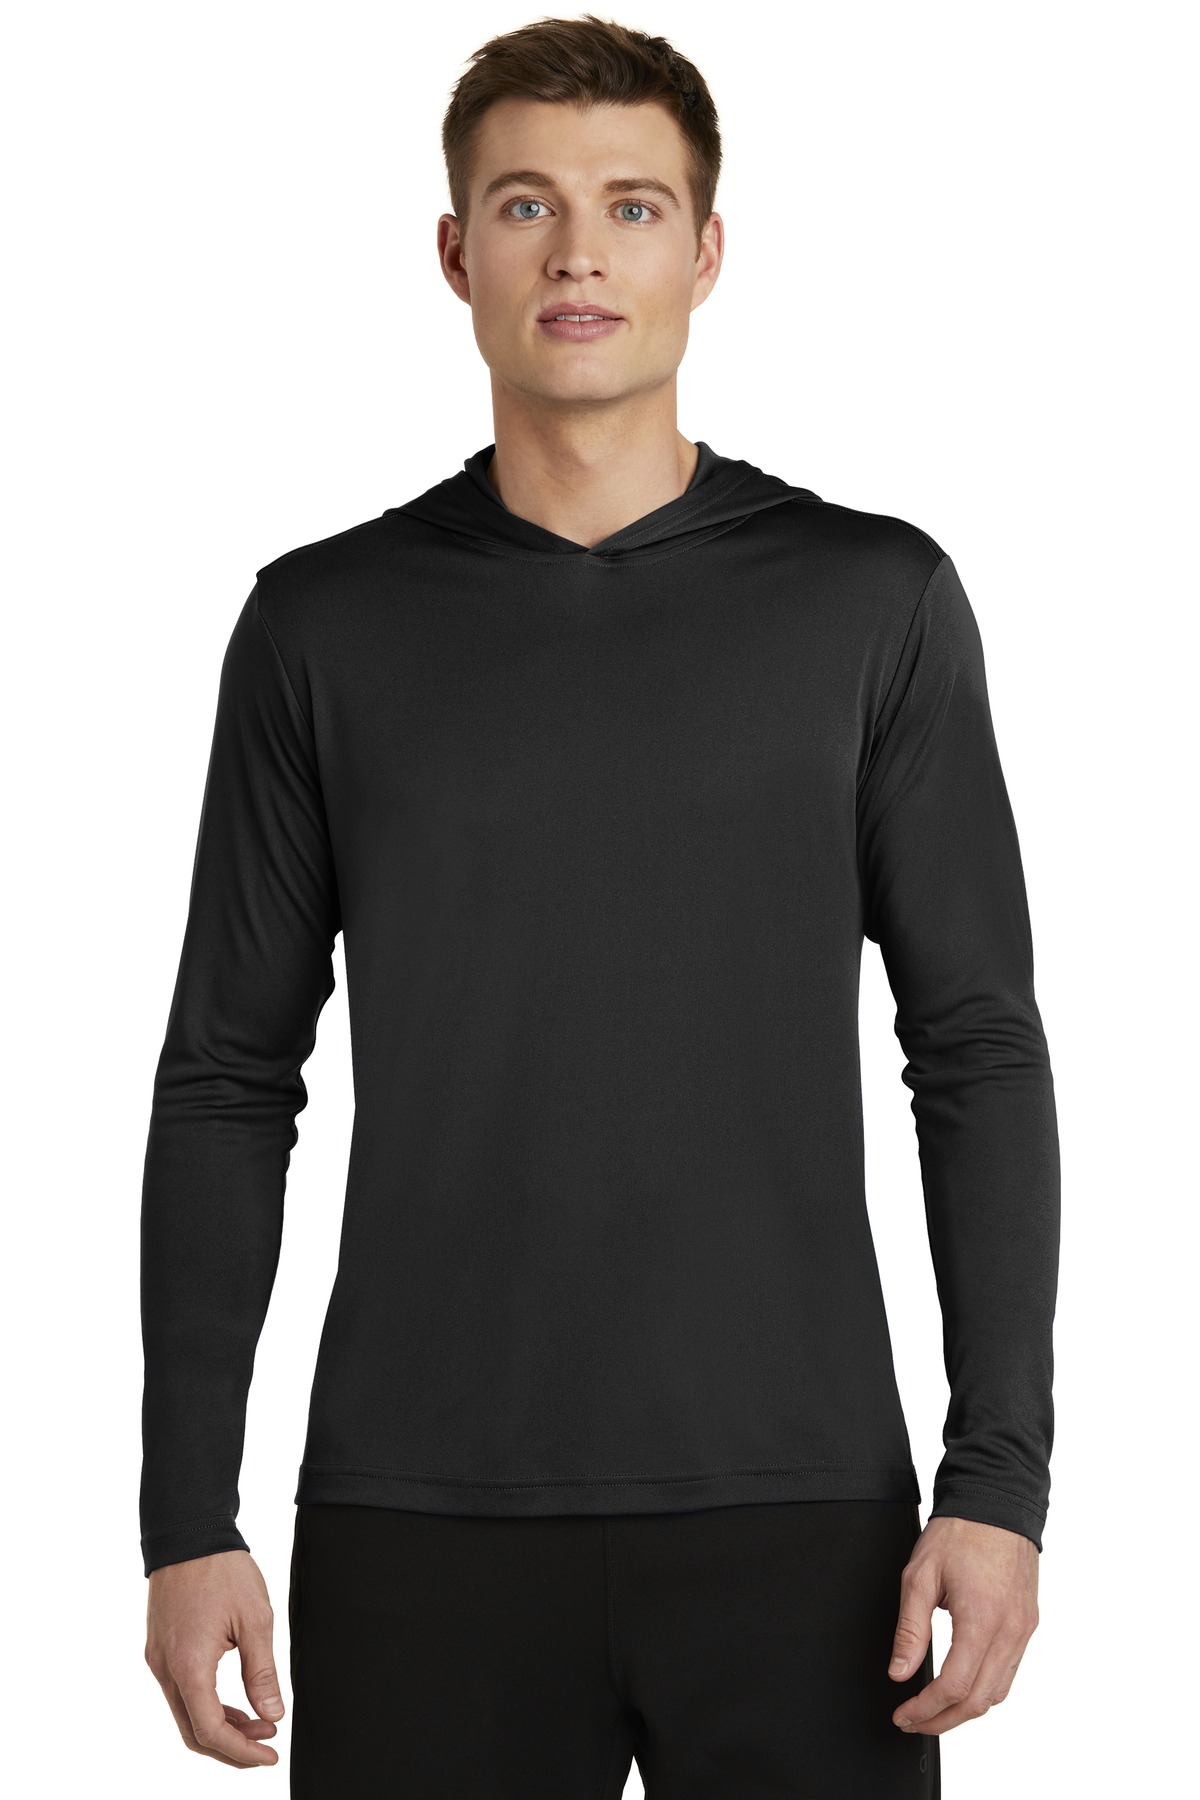 Sport-Tek Hospitality T-Shirts ® PosiCharge ® Competitor Hooded Pullover.-Sport-Tek